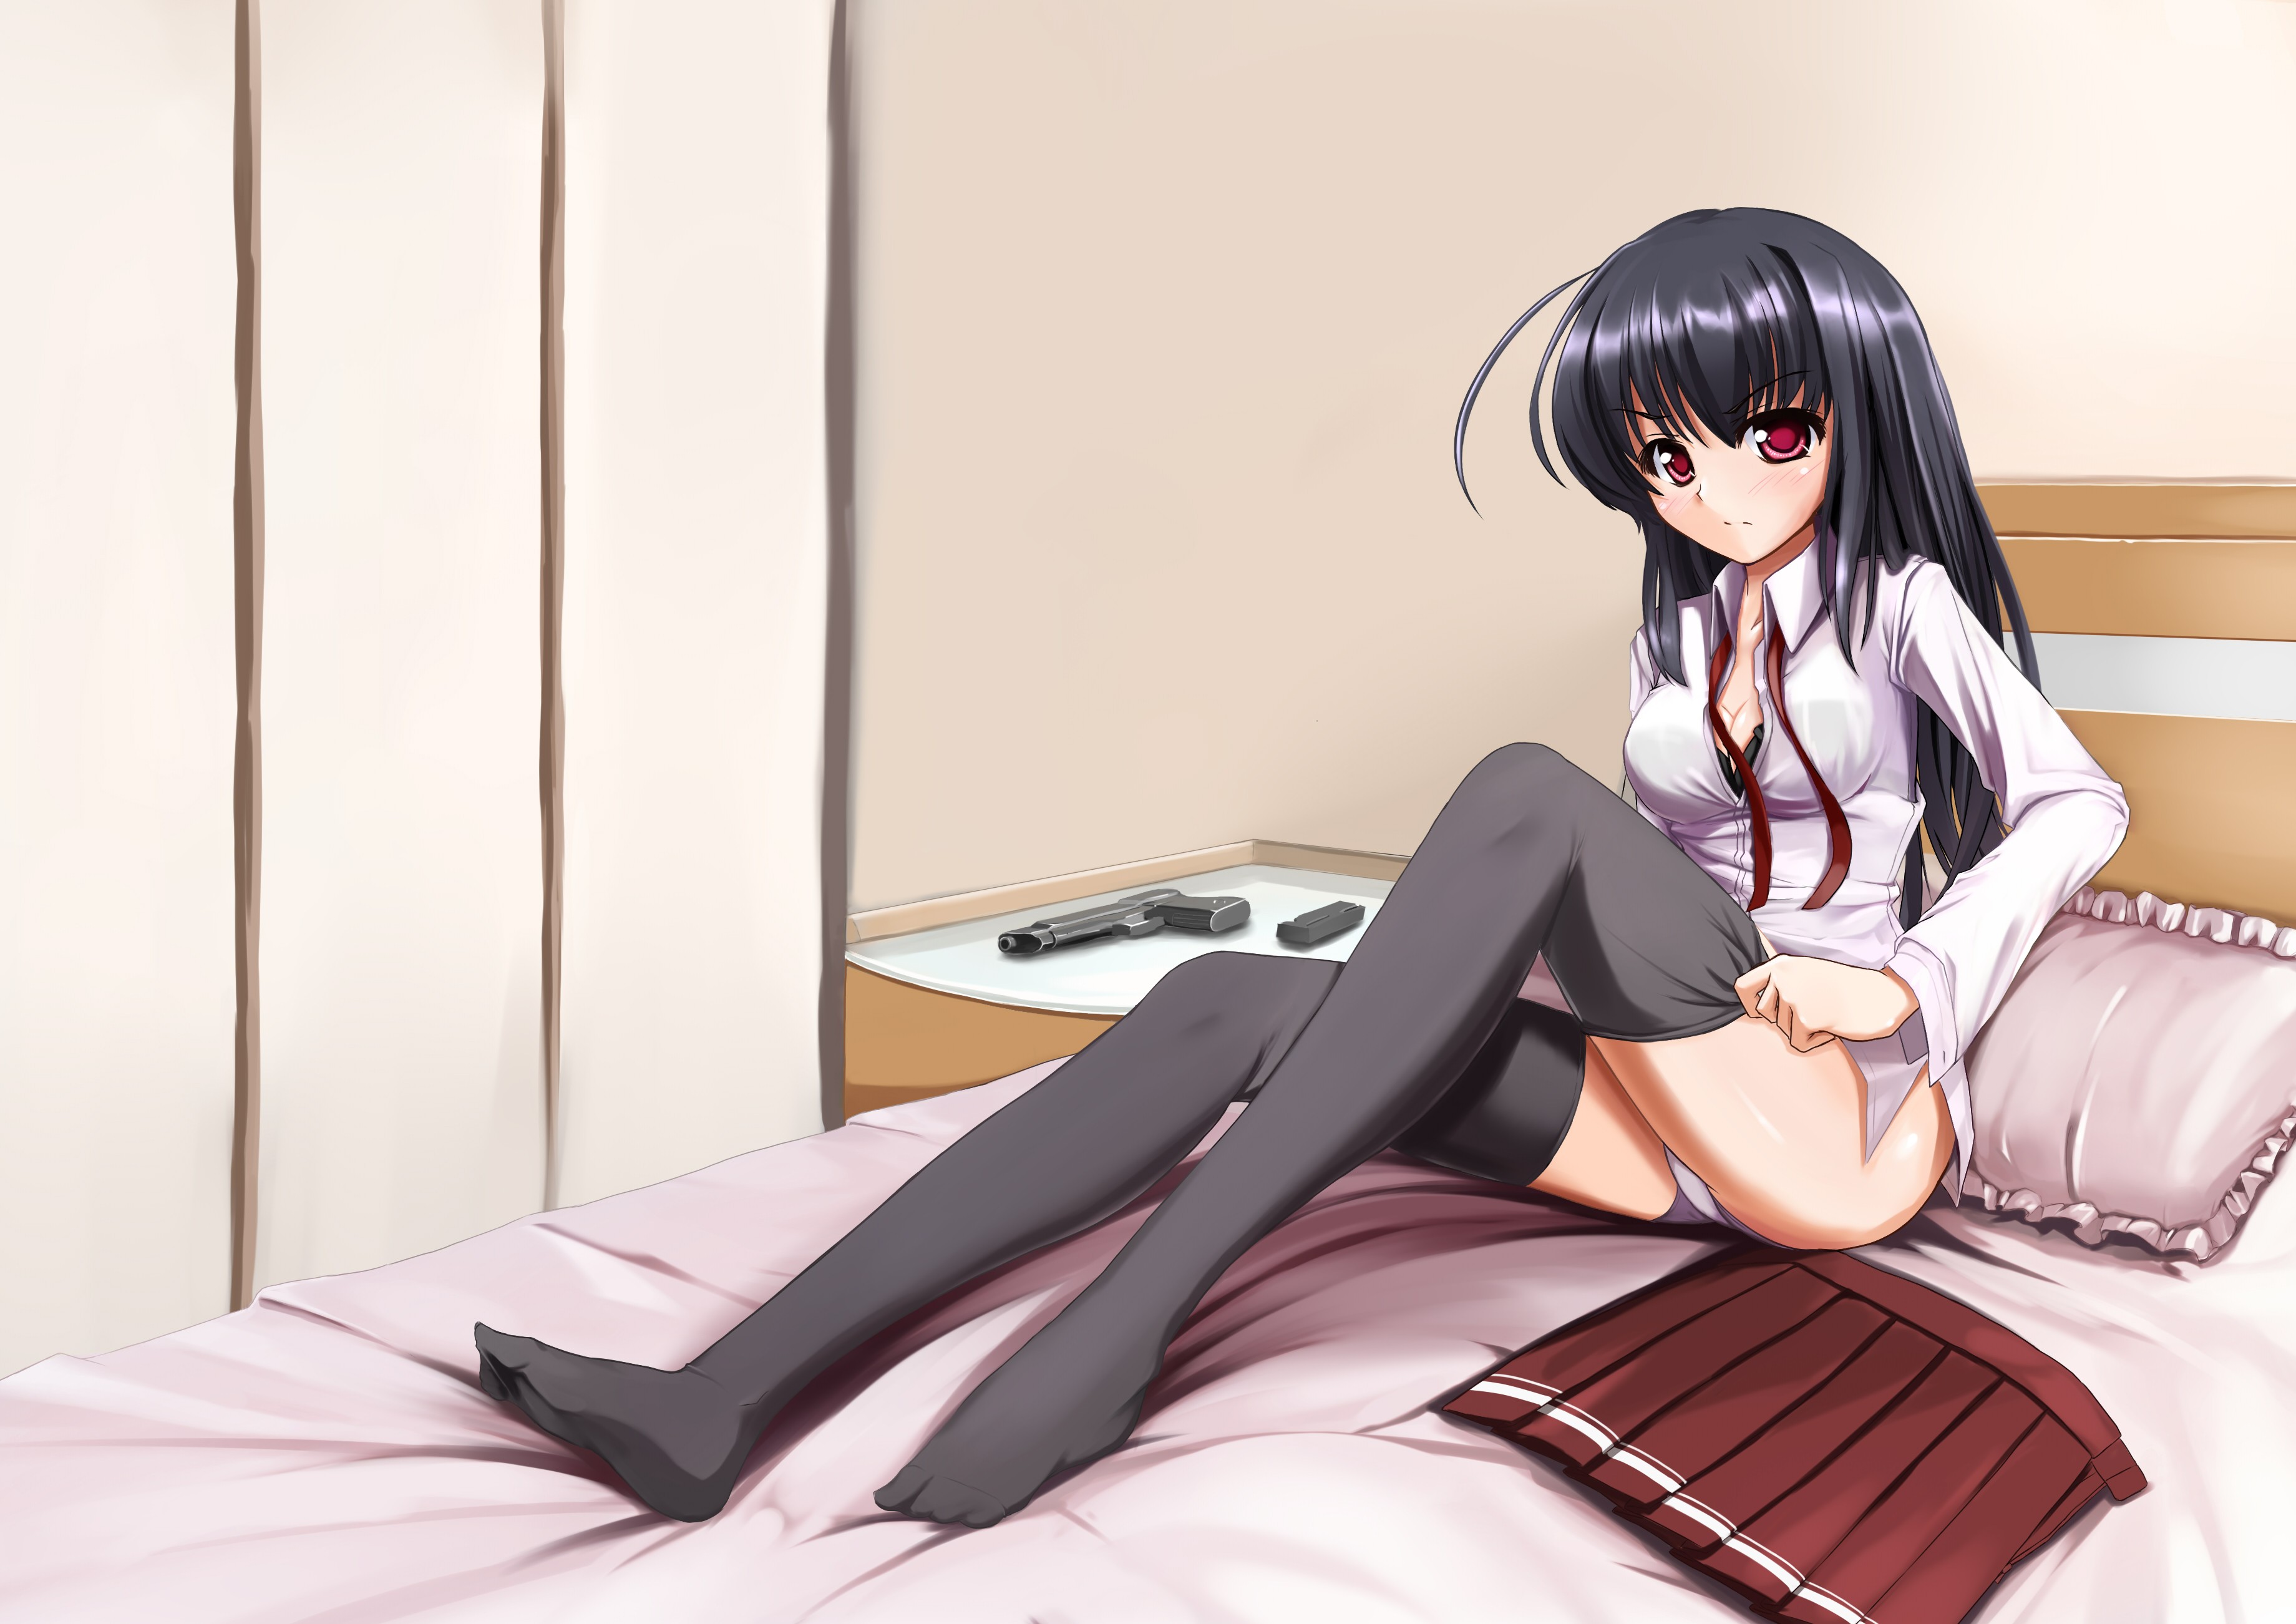 Anime 3680x2603 anime anime girls underwear stockings long hair black hair red eyes open shirt in bed weapon gun thigh-highs school uniform Yumemi